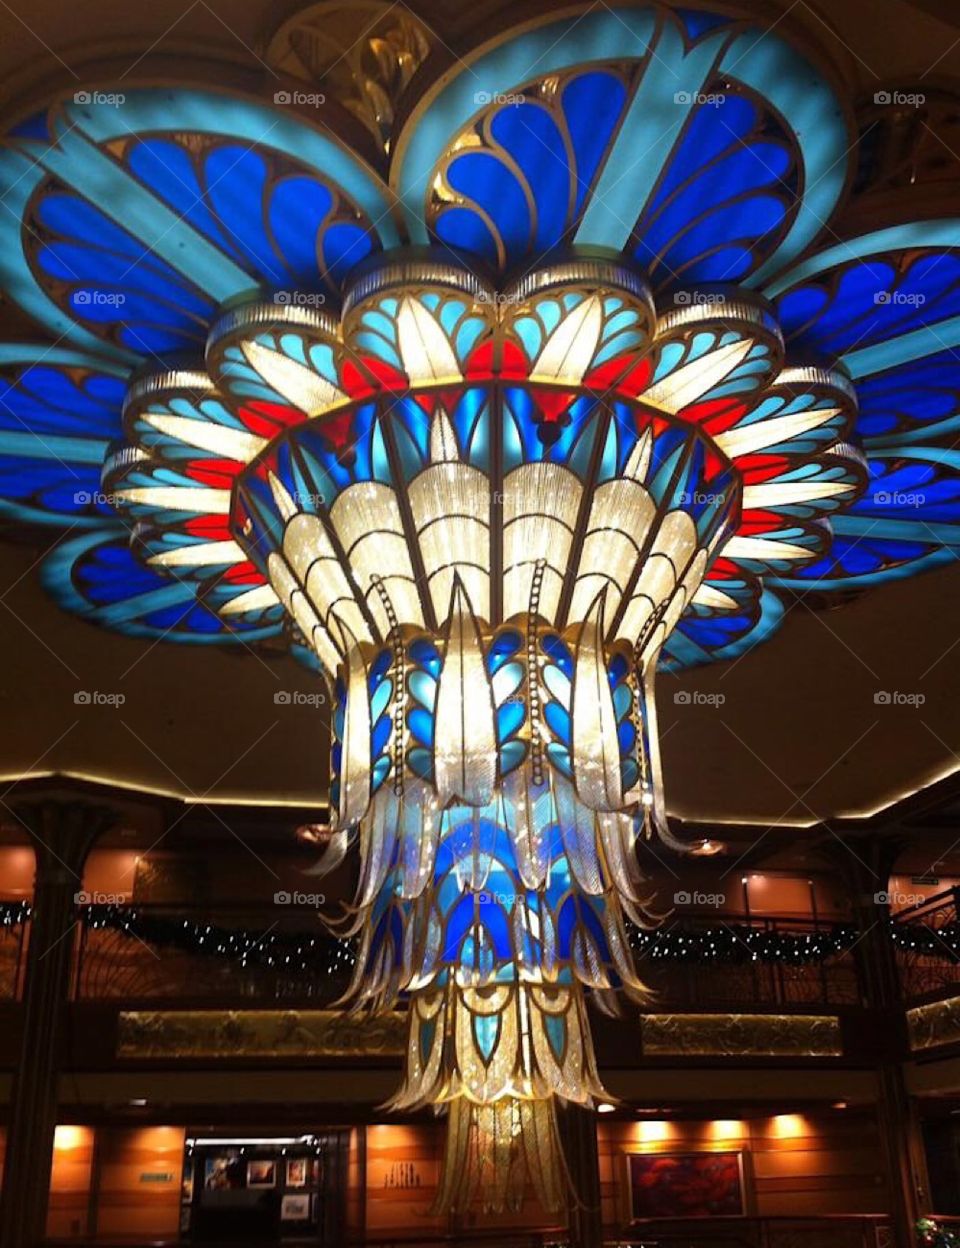 Artistic chandelier in the foyer of the Disney Dream Cruiseline. 